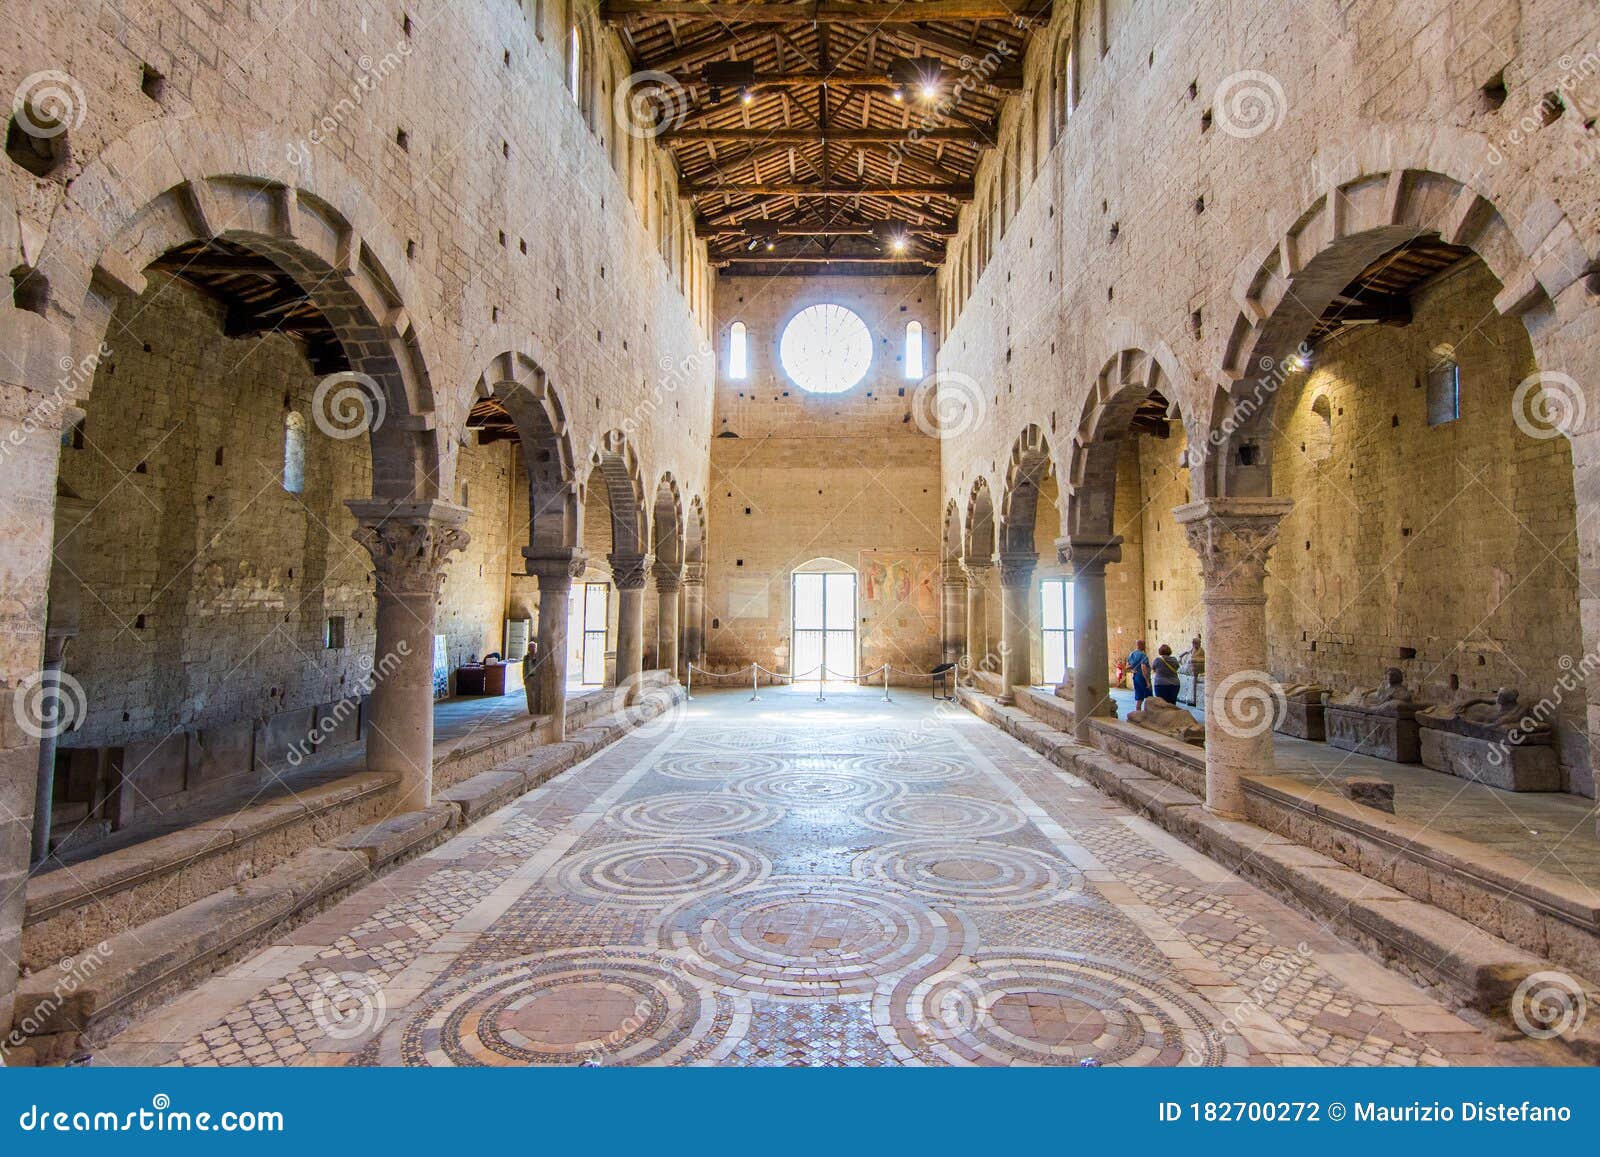 Tuscania Viterbo Italy Interior Of San Pietro Church Stock Photo Image Of Decoration Historic